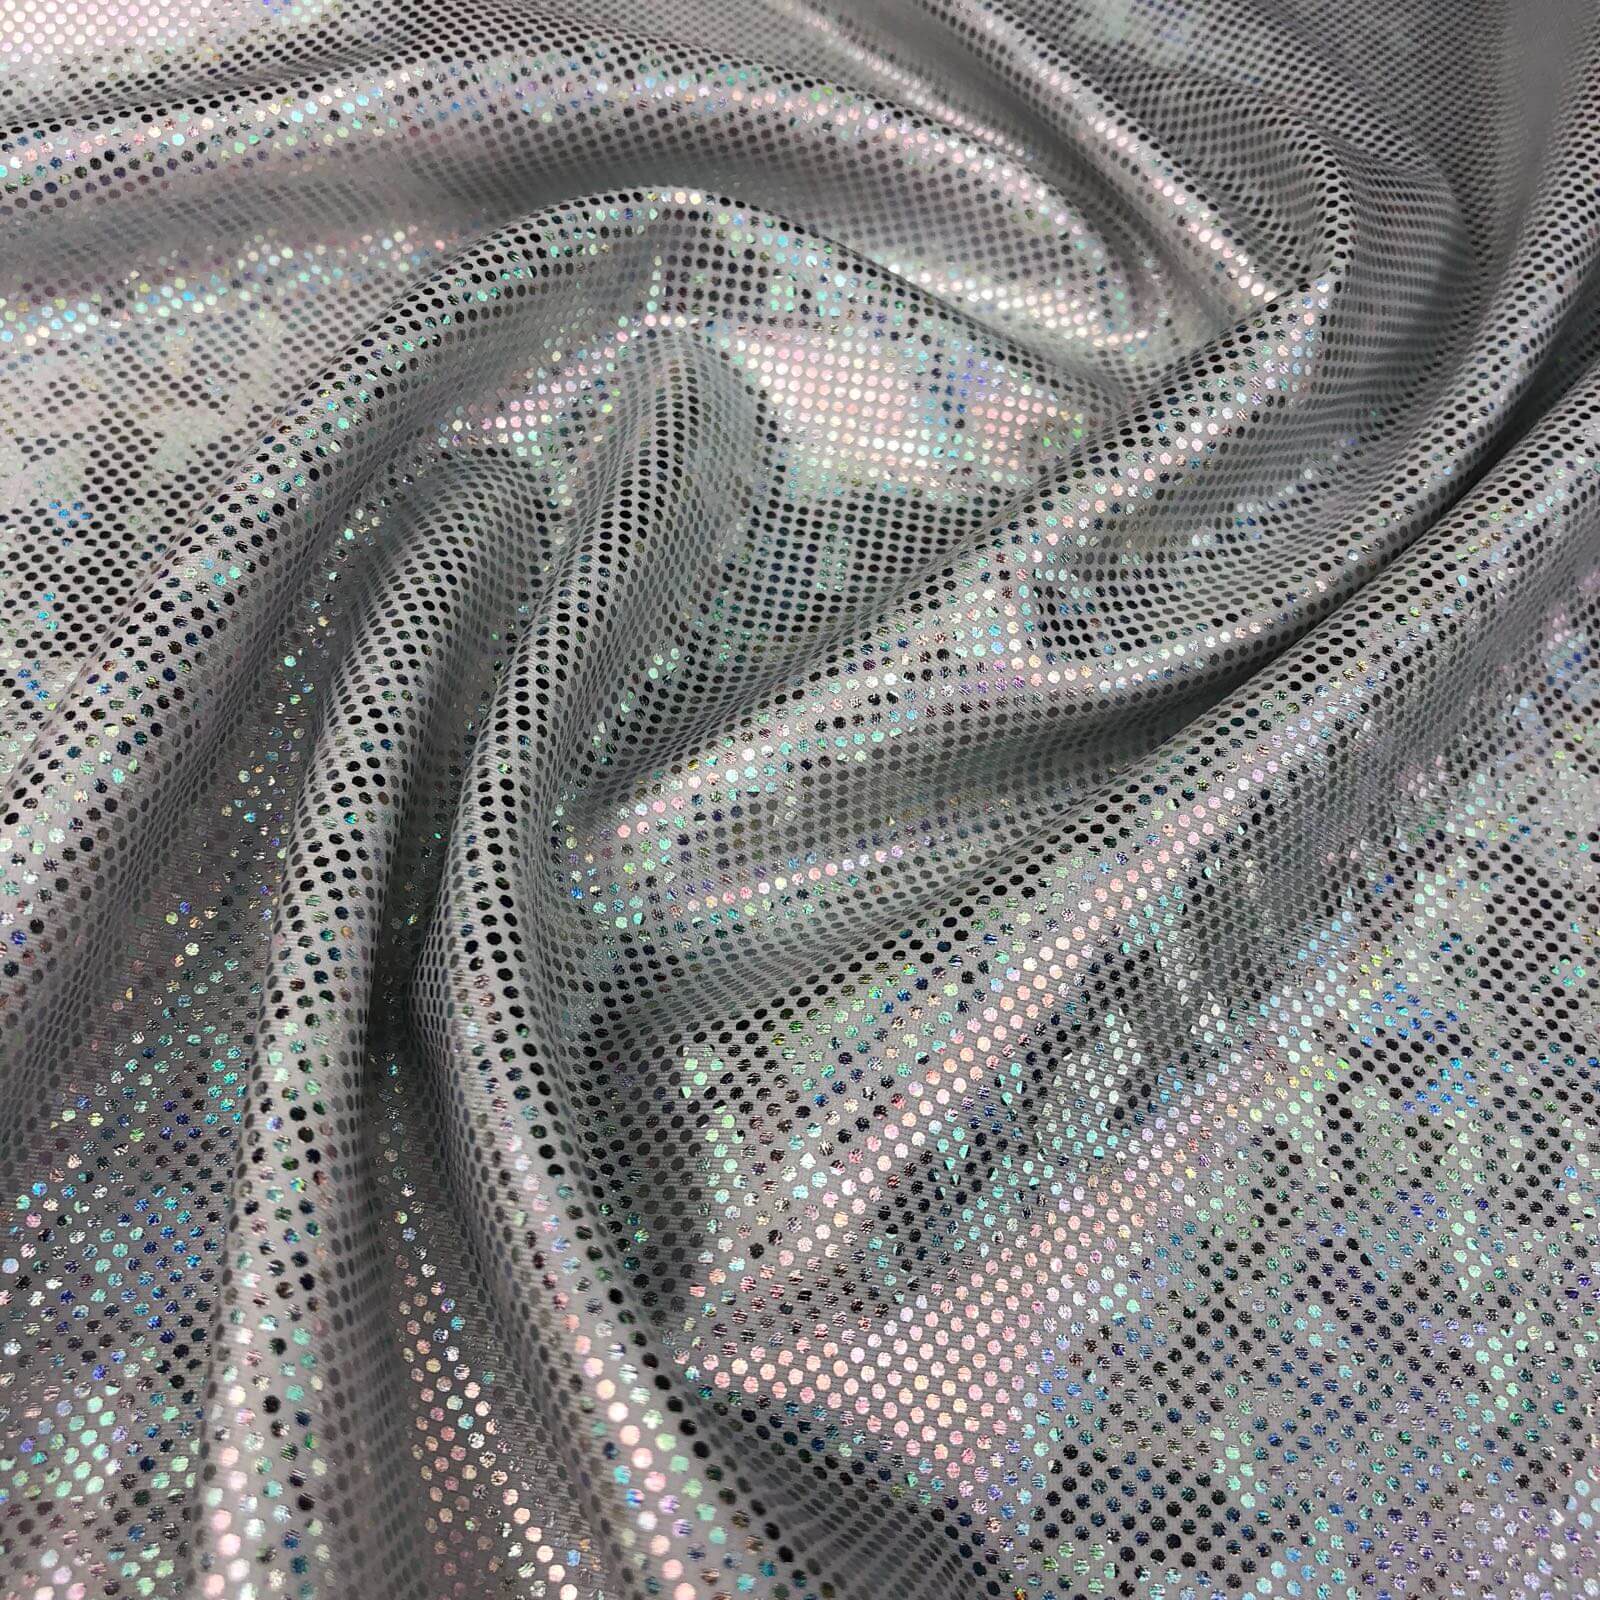 Silver Hologram Broken Glass Metallic Foil Nylon Lycra Spandex Fabric 4 Way  Stretch for swimwear dancewear sportwear dress (242-9) Spandex Fabric